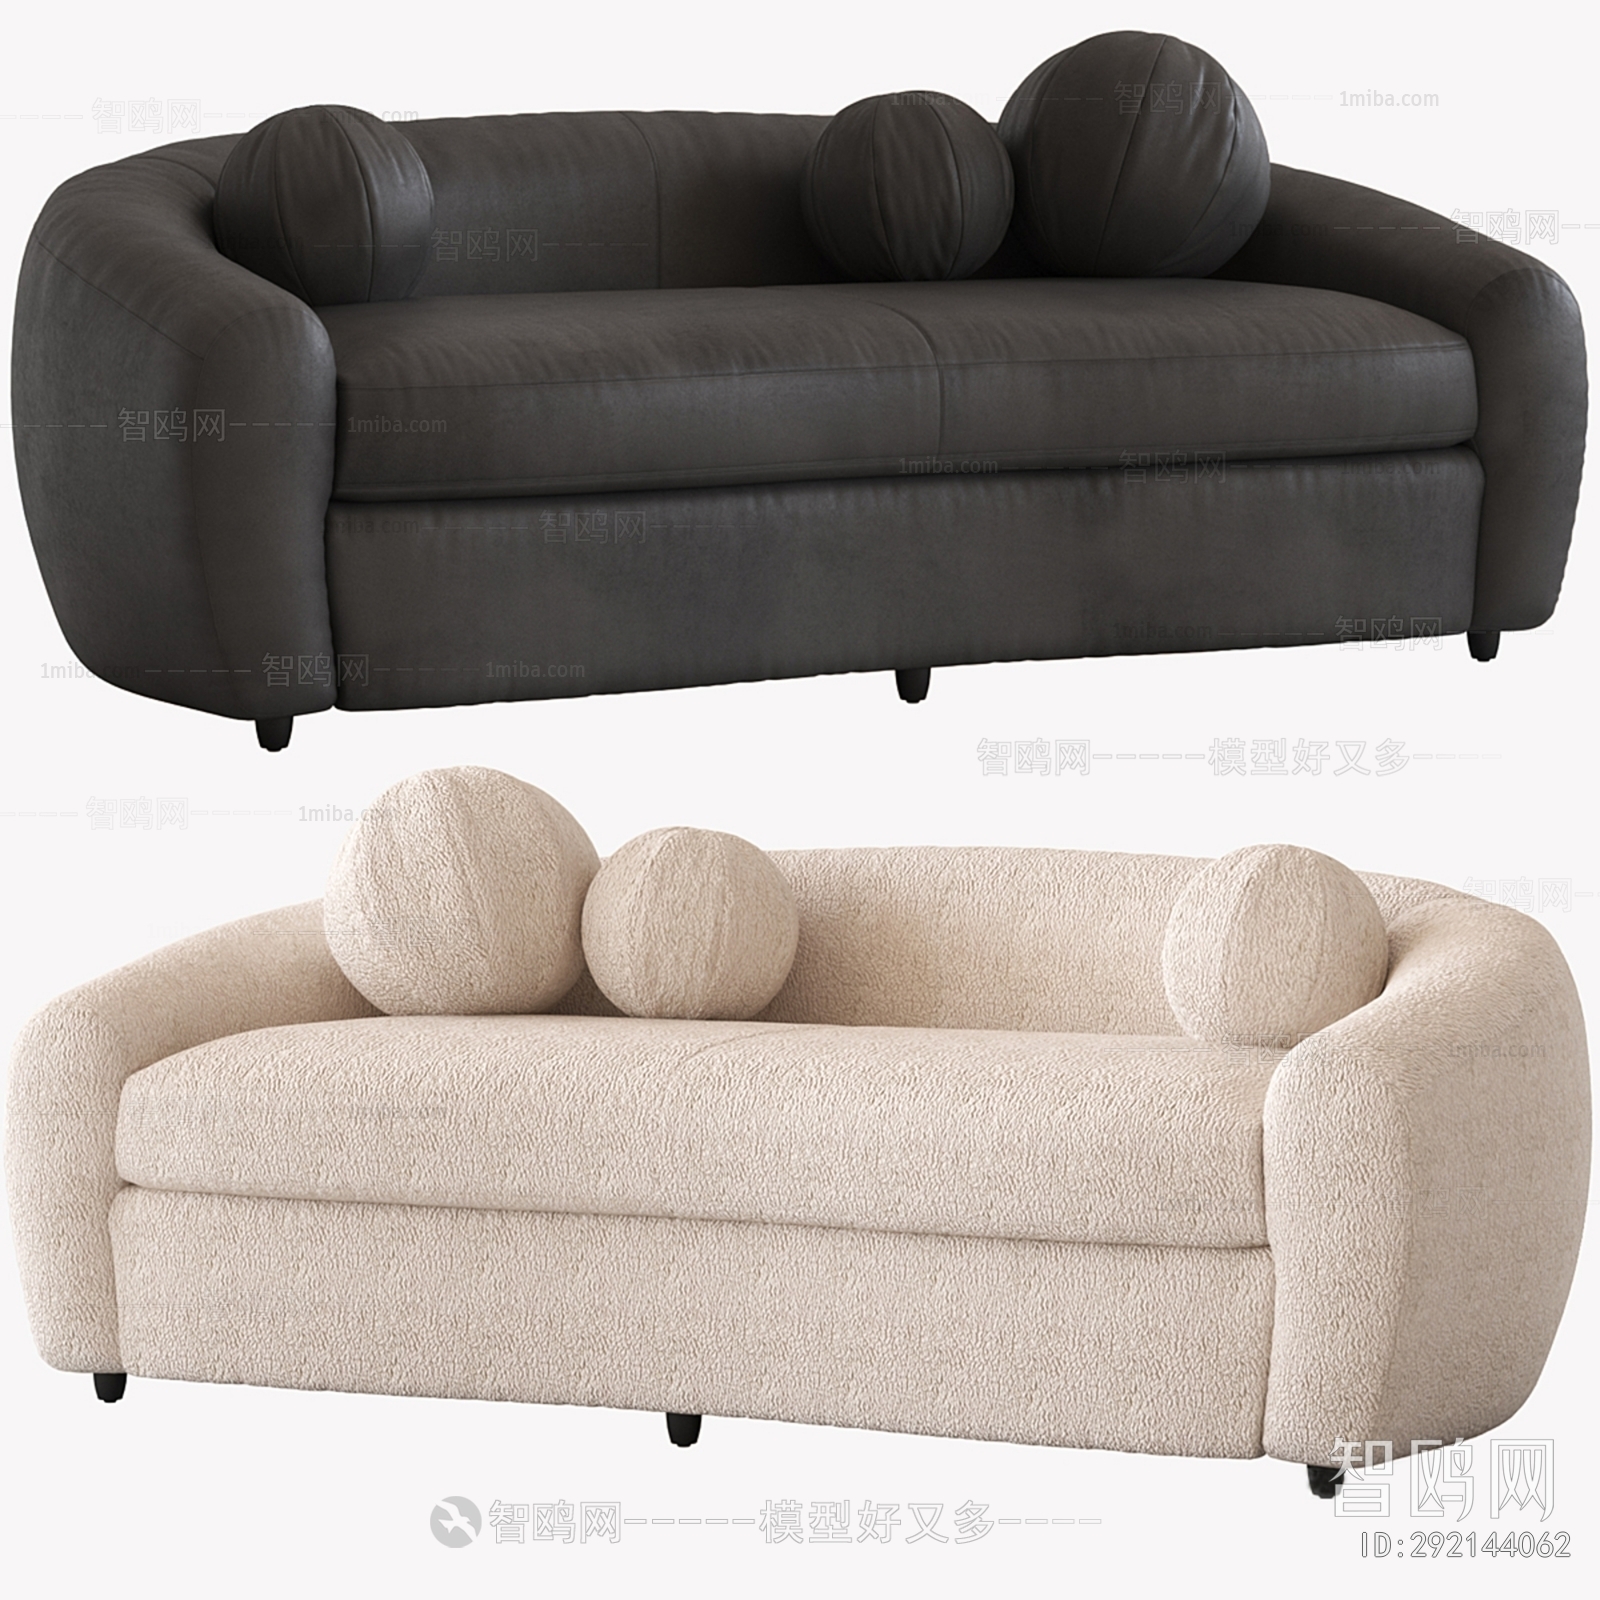 Wabi-sabi Style A Sofa For Two